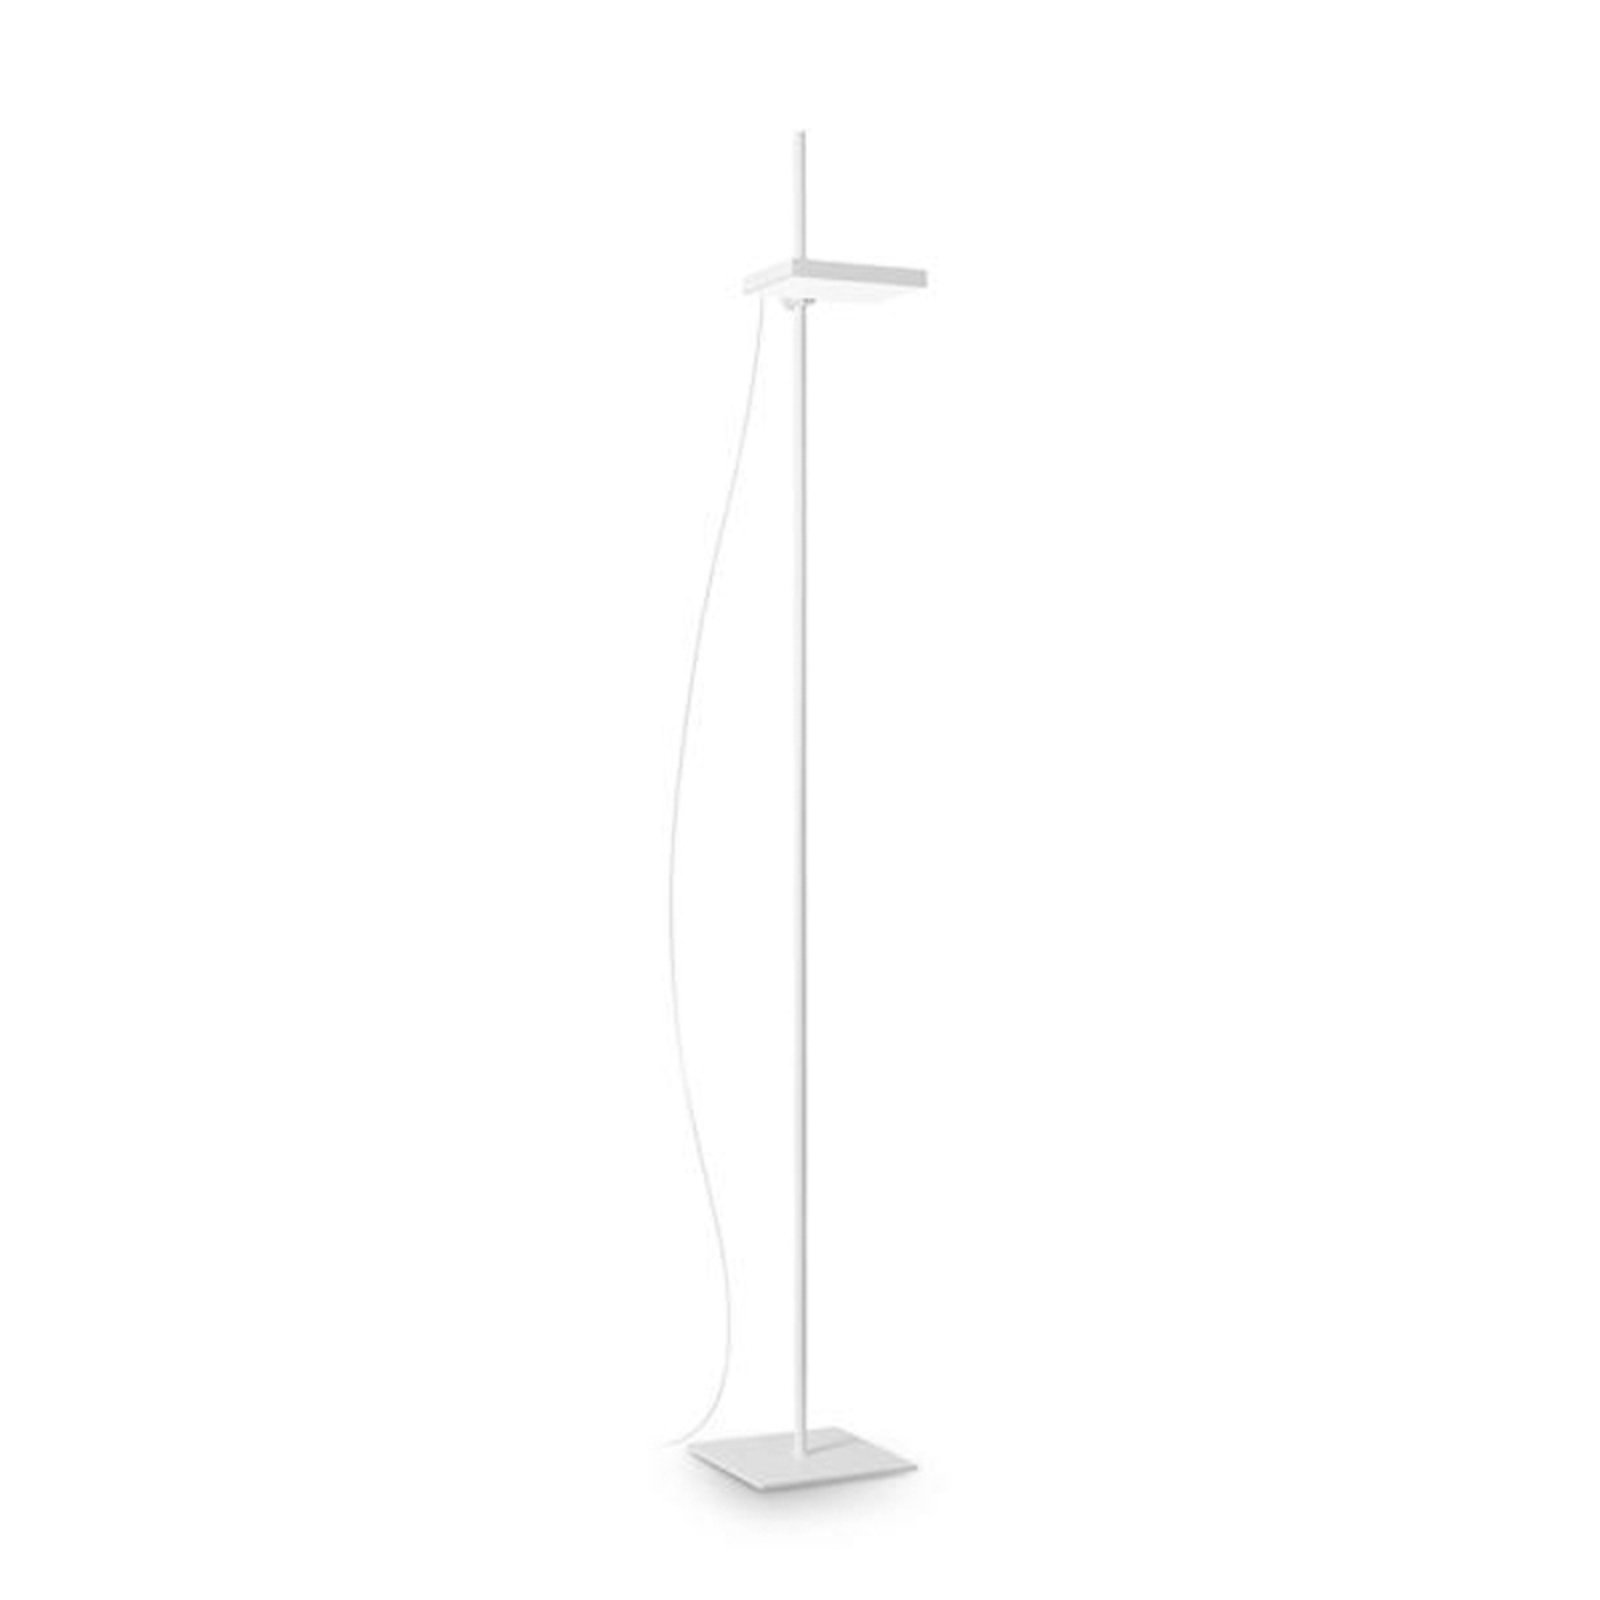 "Ideal Lux" LED grindų šviestuvas "Lift", baltas, metalas, aukštis 180 cm